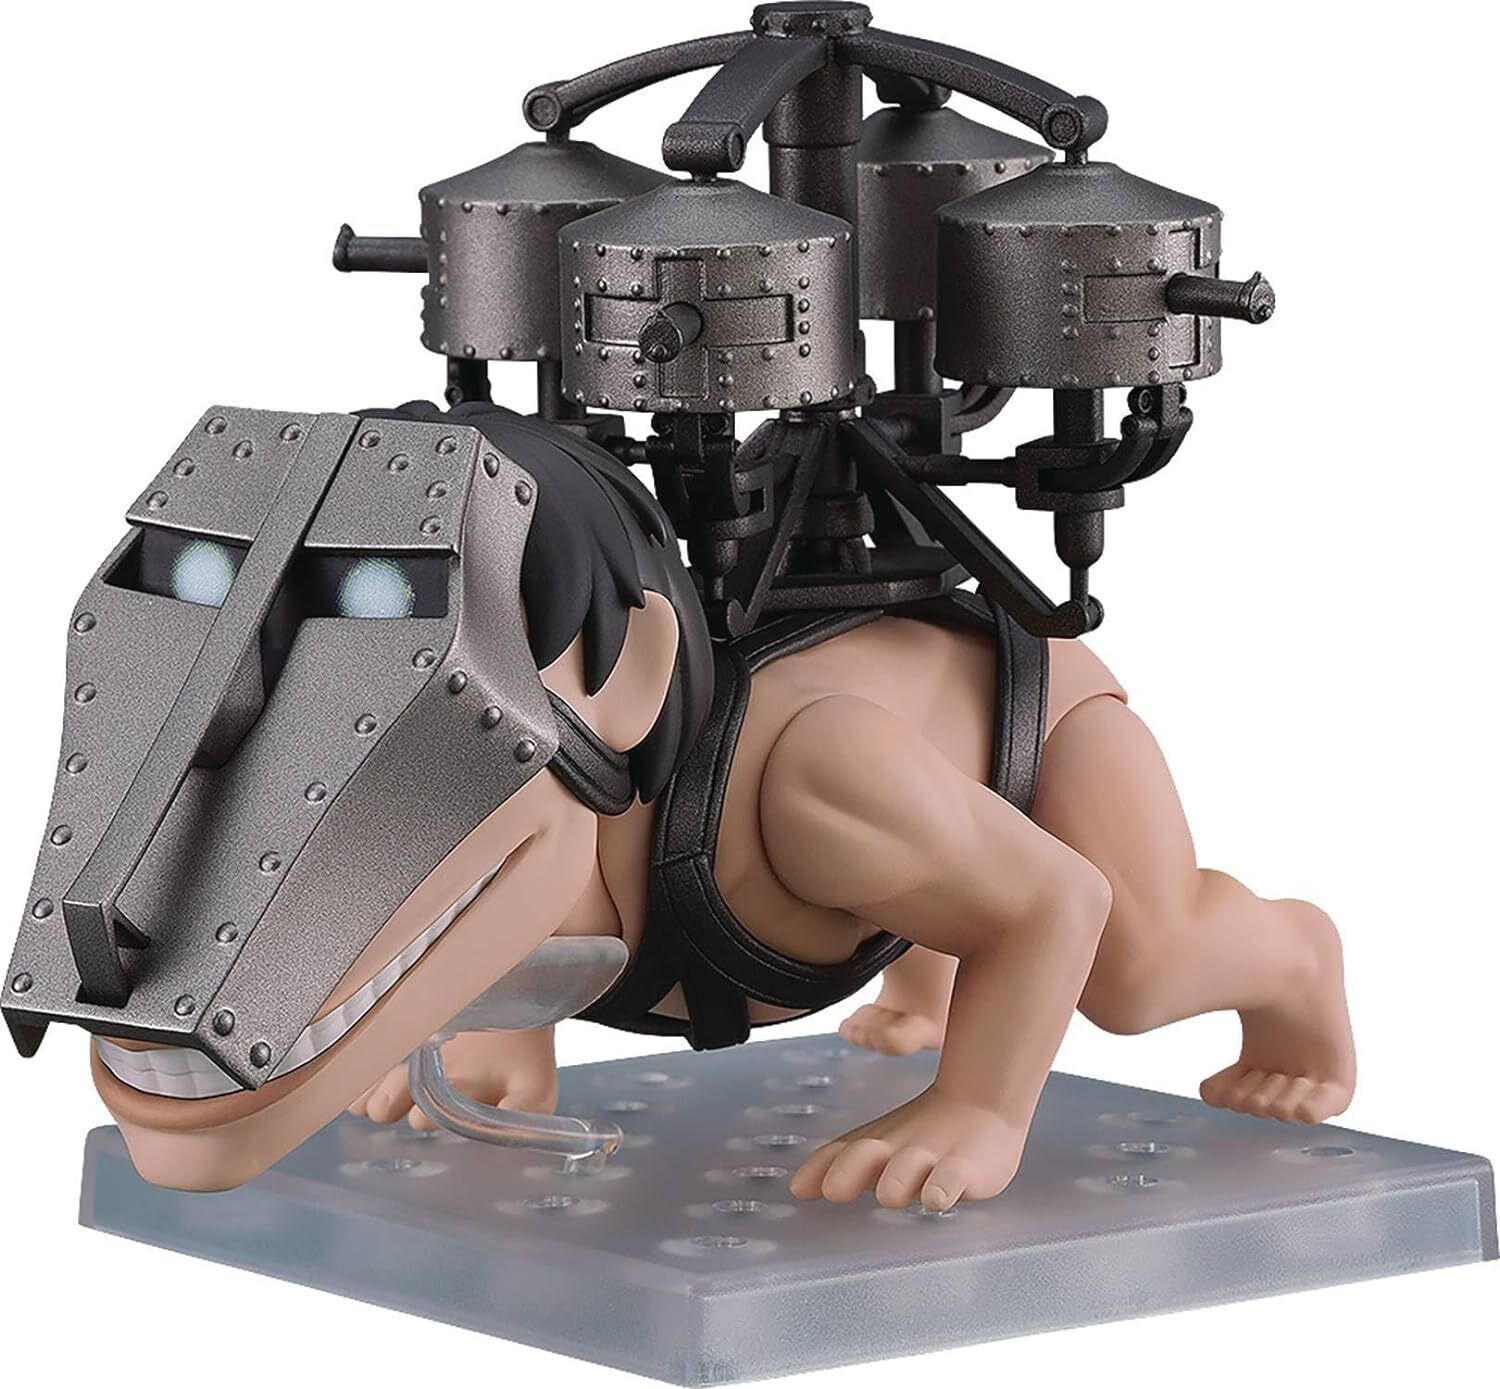 Attack on Titan Nendoroid Action Figure Cart Titan 7 cm Good Smile Company NEW!